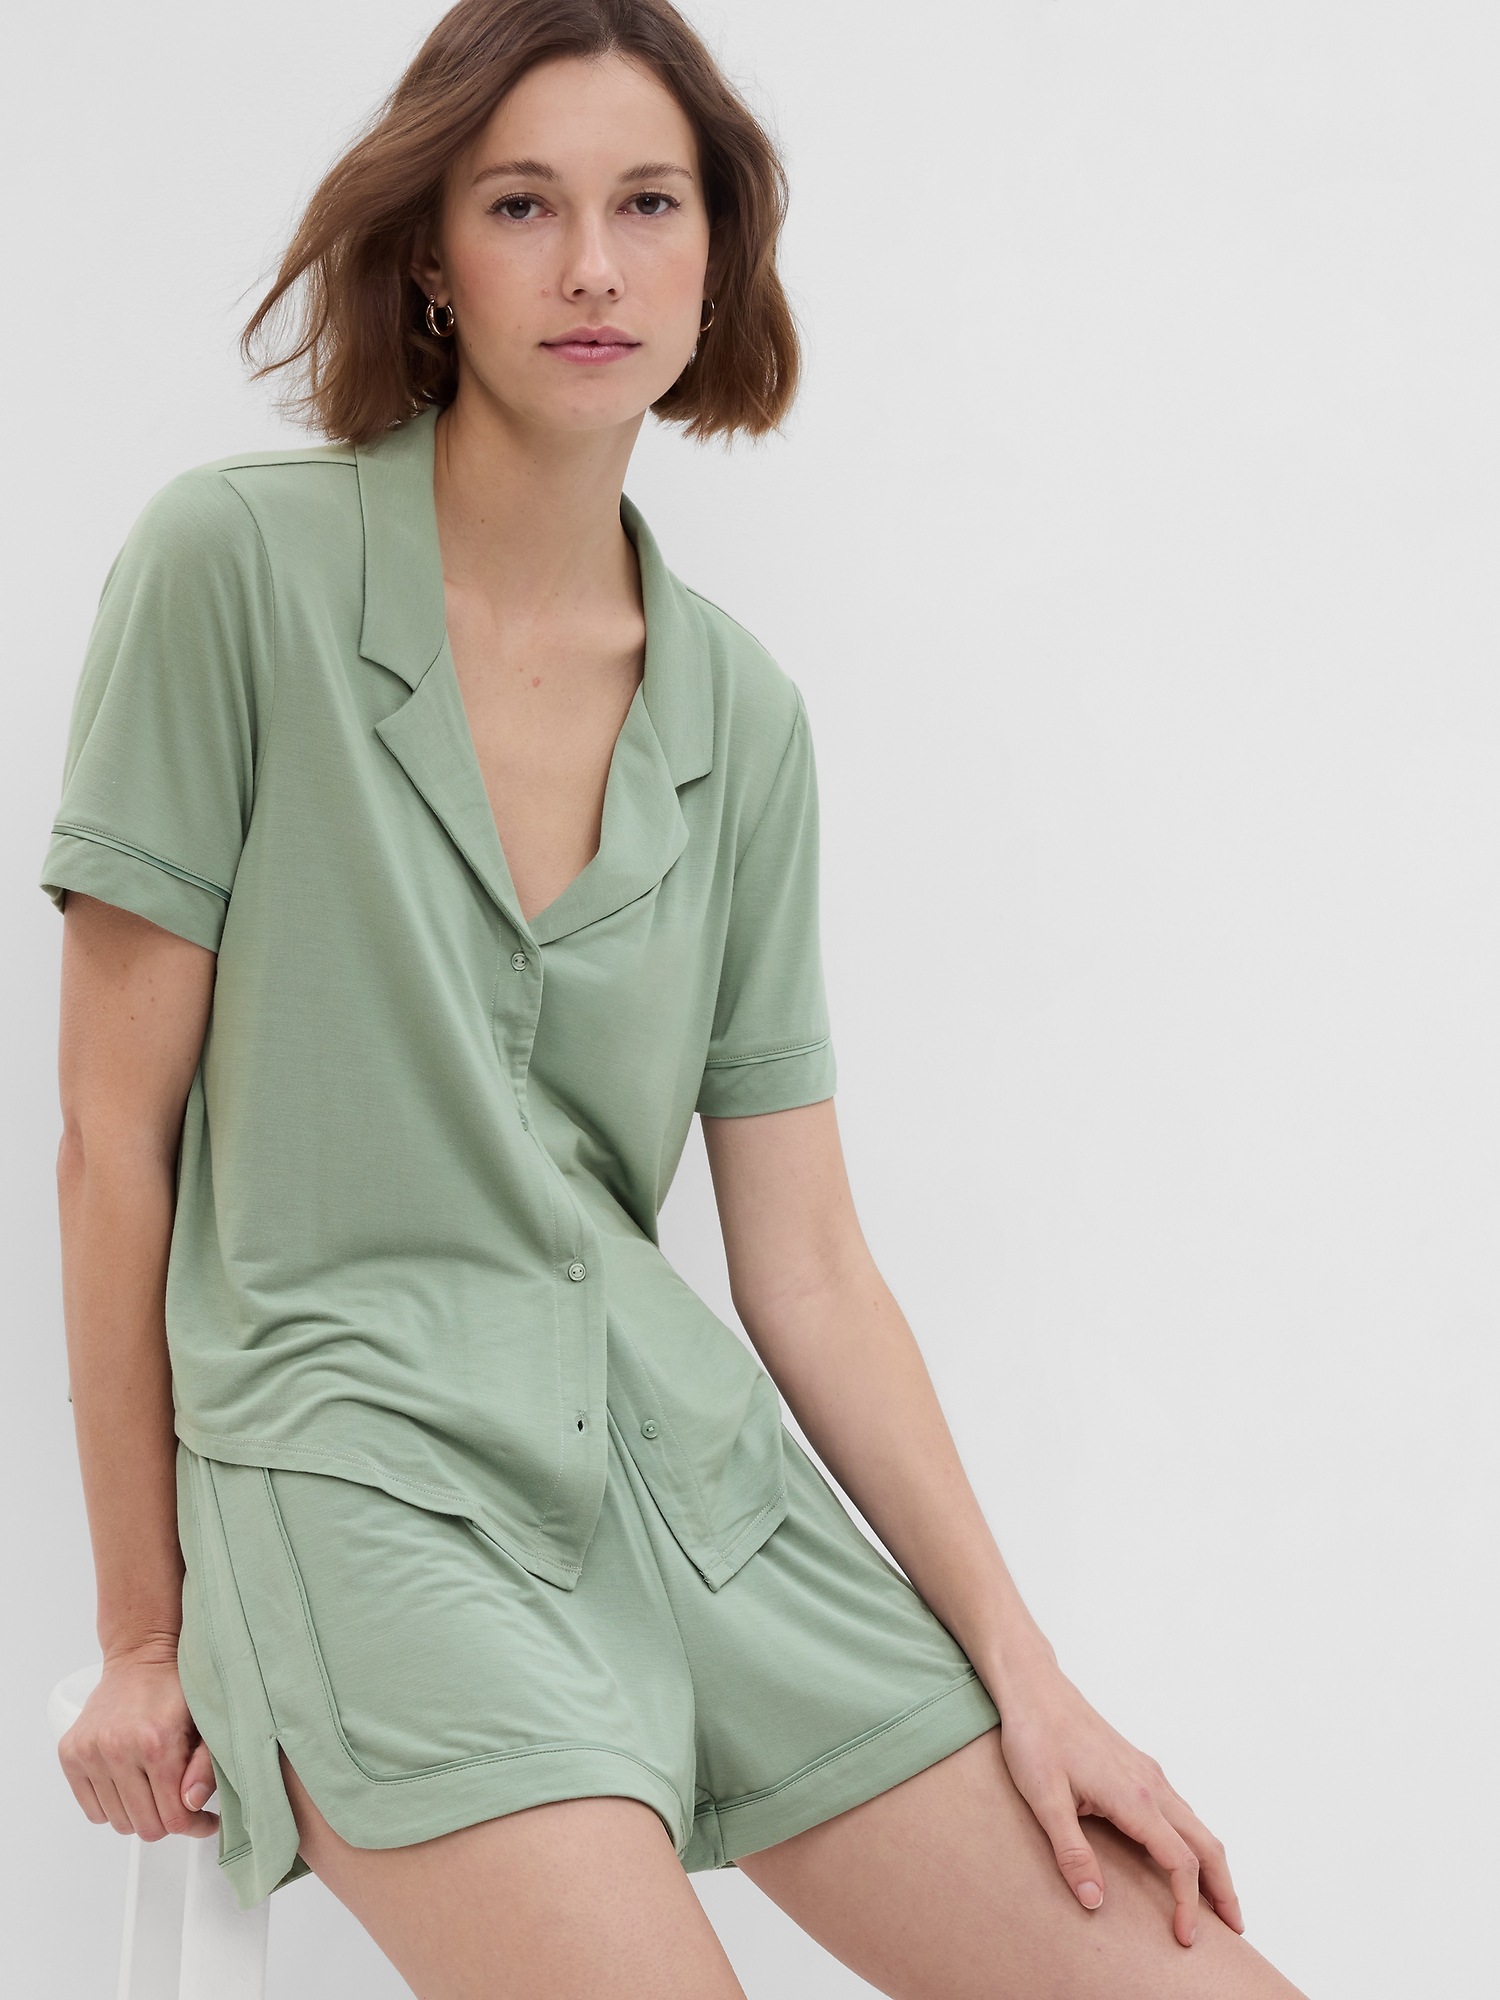 Gap LENZING&#153 TENCEL&#153 Modal Pajama Shirt green. 1